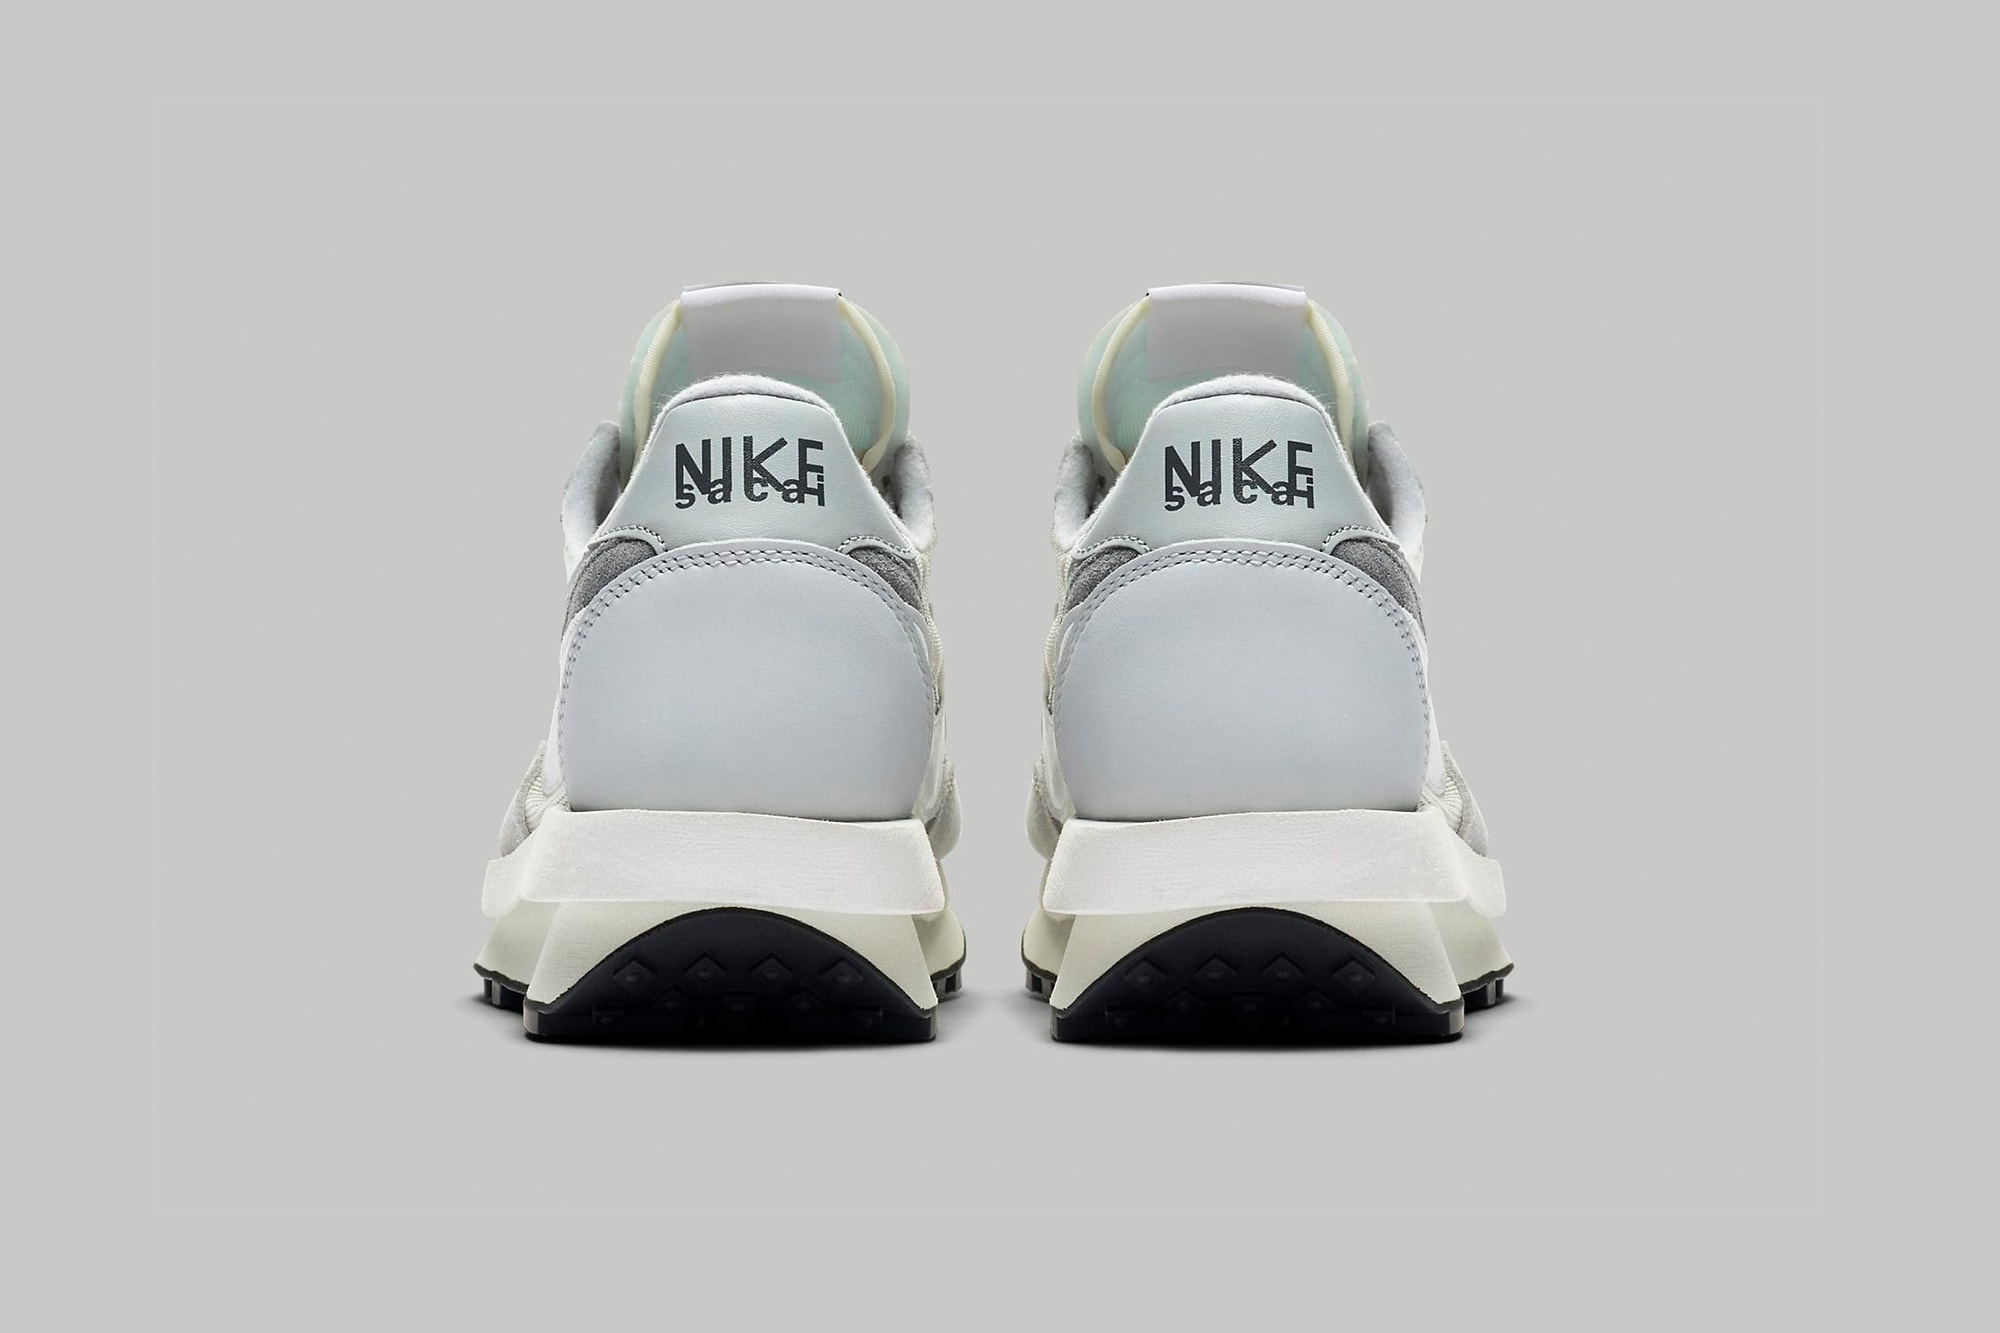 sacai x Nike LDWaffle 全新聯名系列官方圖片公開